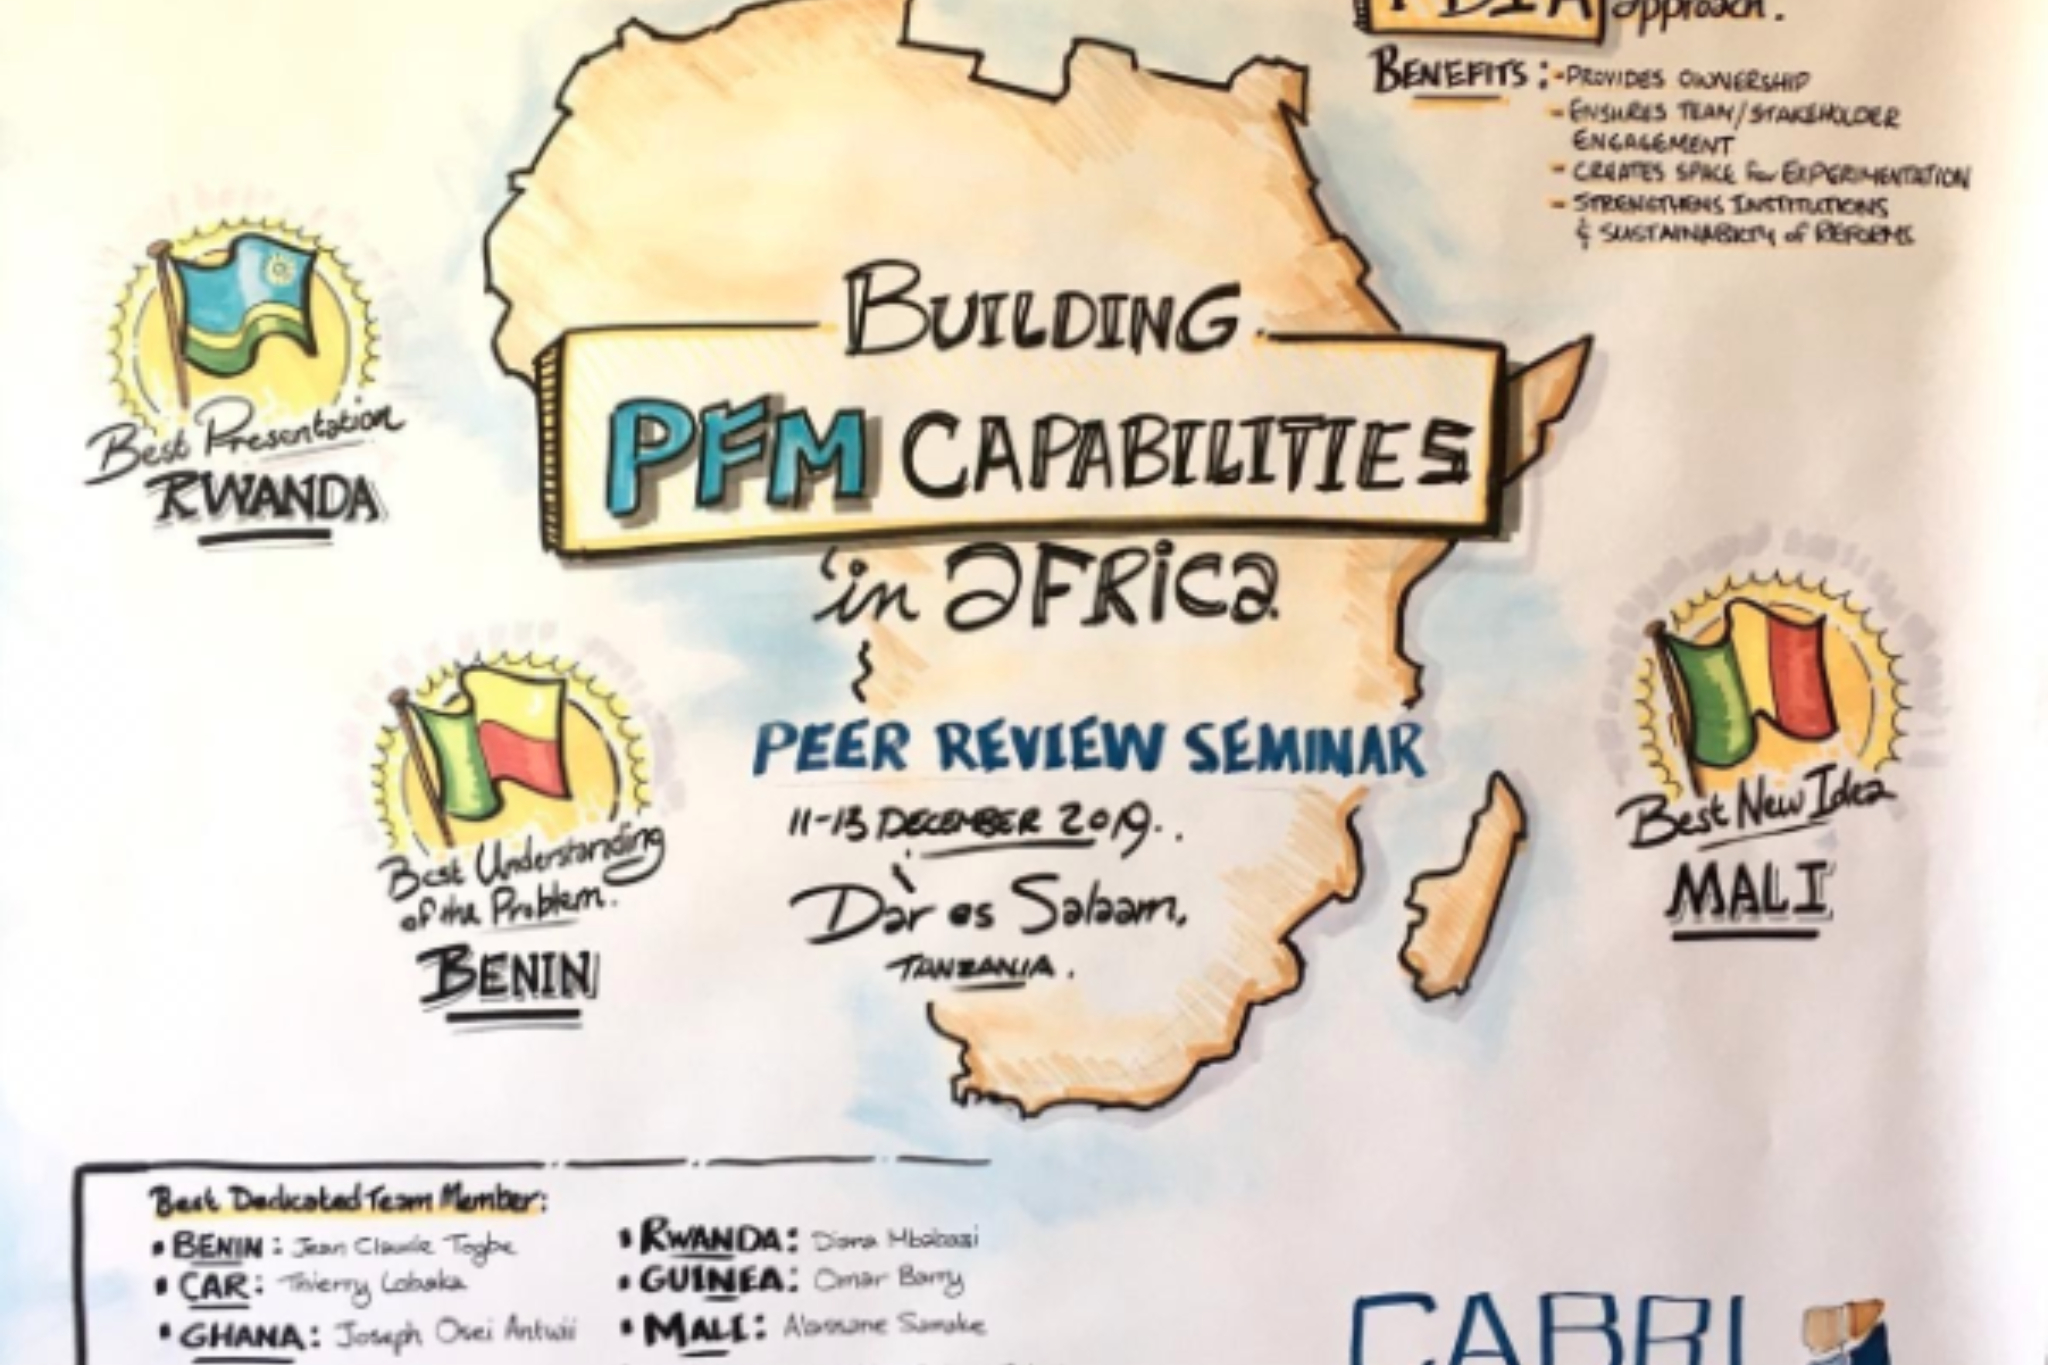 Peer Review Seminar, Tanzania